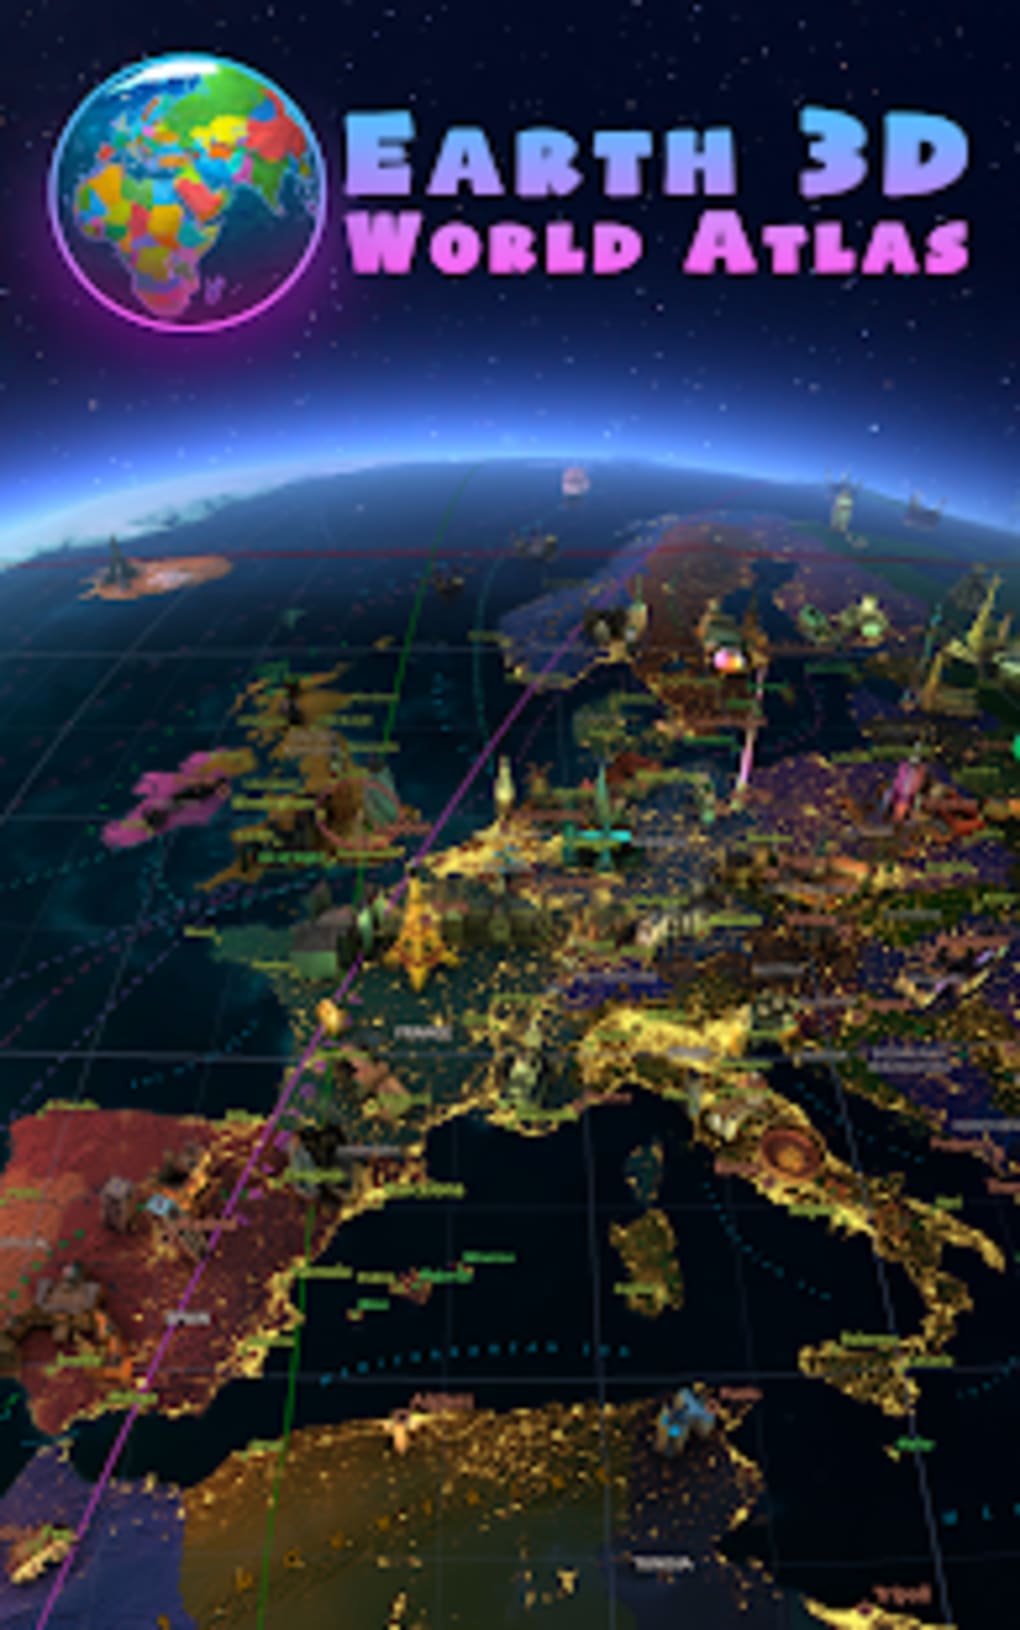 earth 3d - world atlas